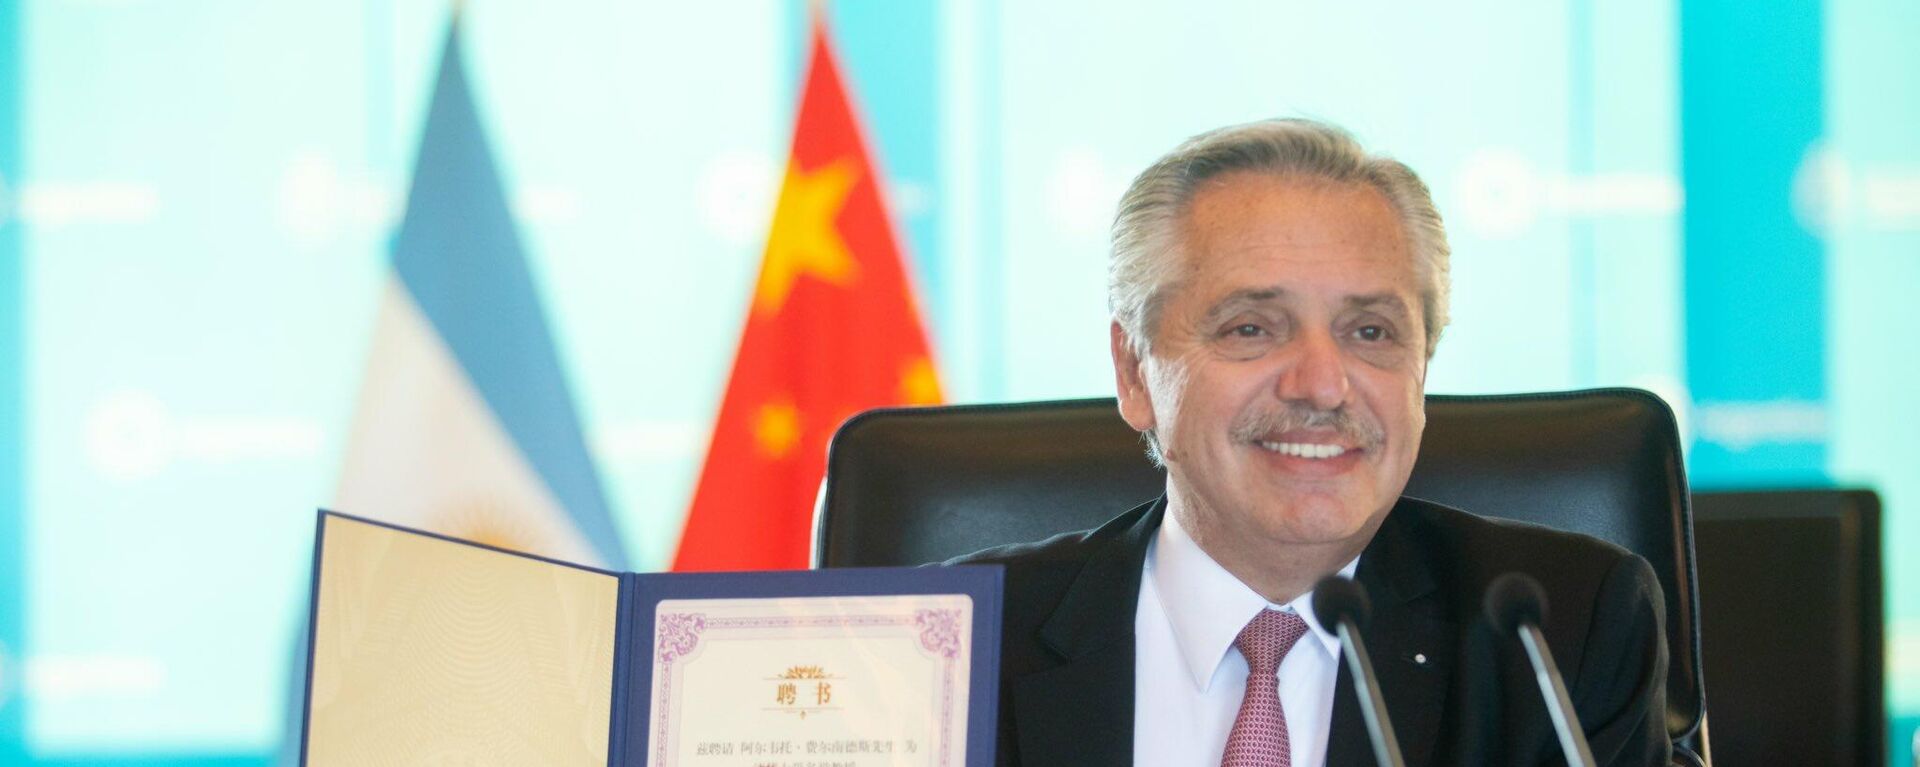 Alberto Fernández, presidente argentino recibe honoris causa de principal universidad china - Sputnik Mundo, 1920, 04.02.2022